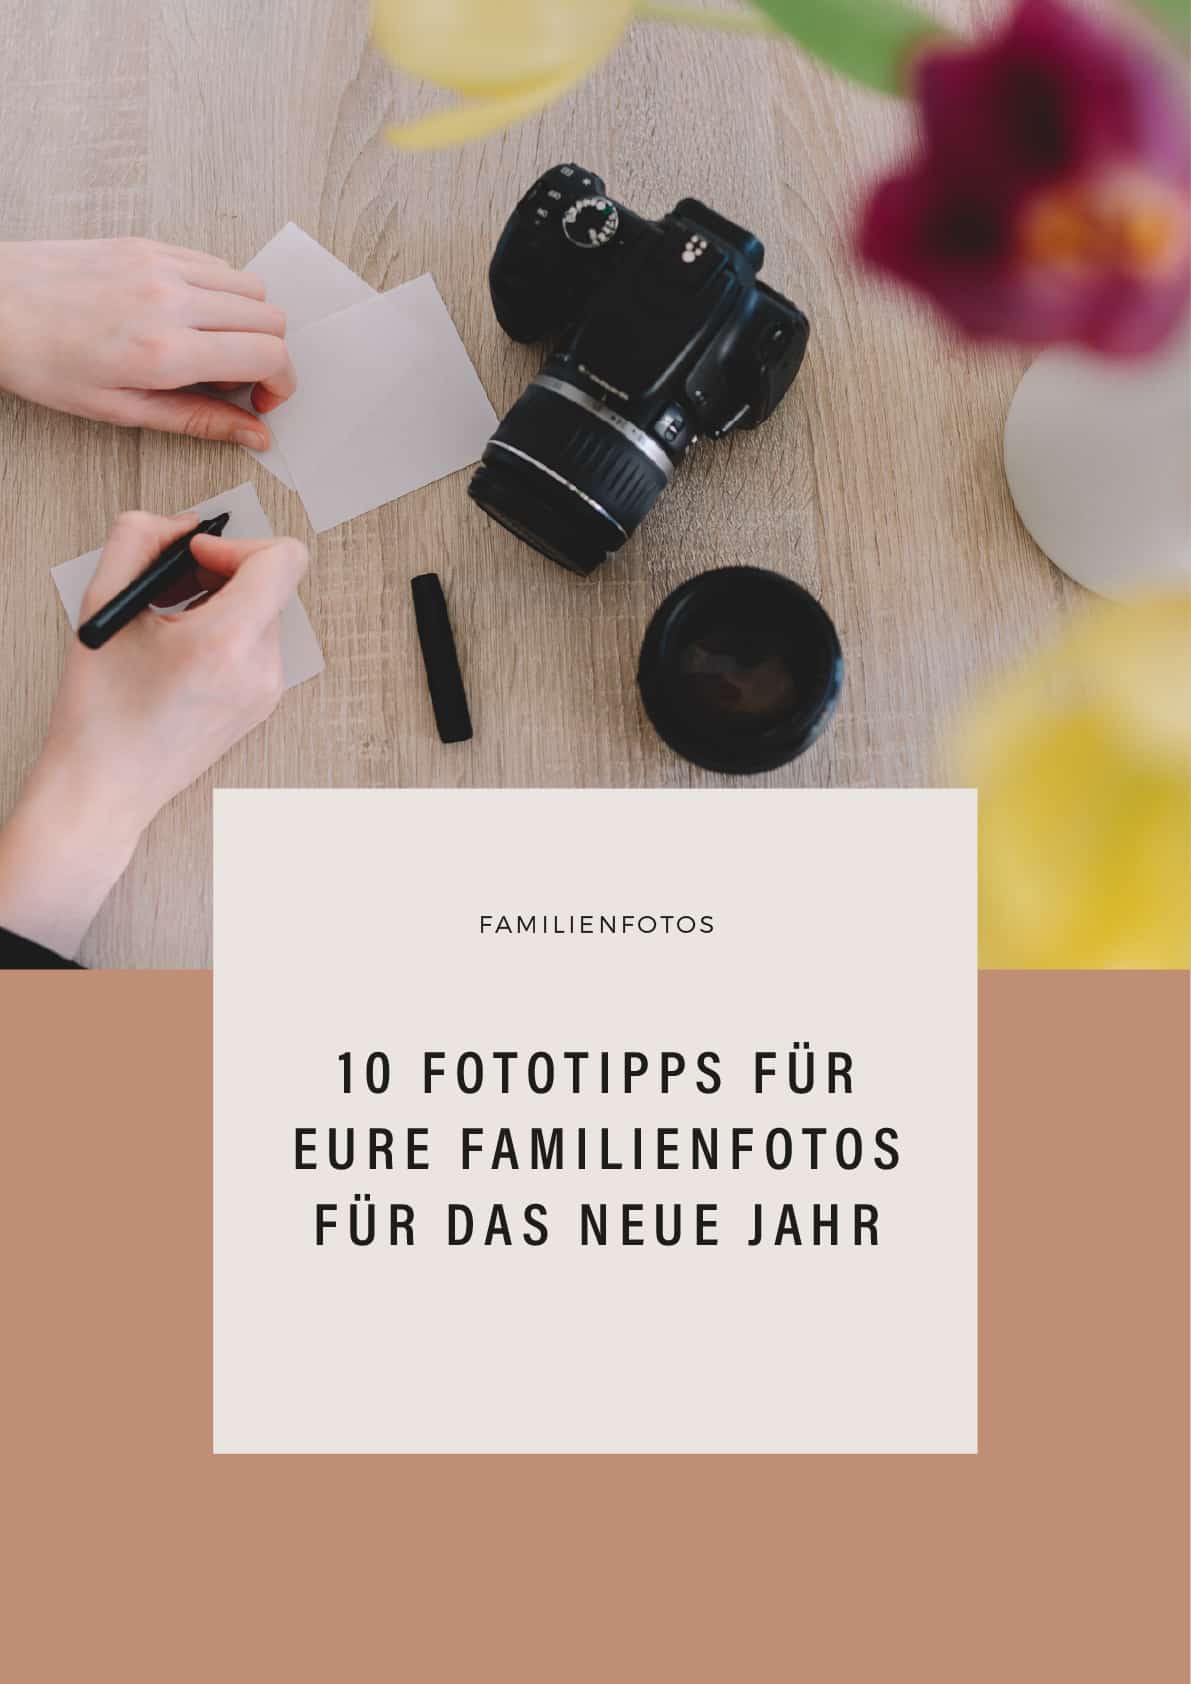 Fototipps für eure Familienfotos für das neue Jahr 1